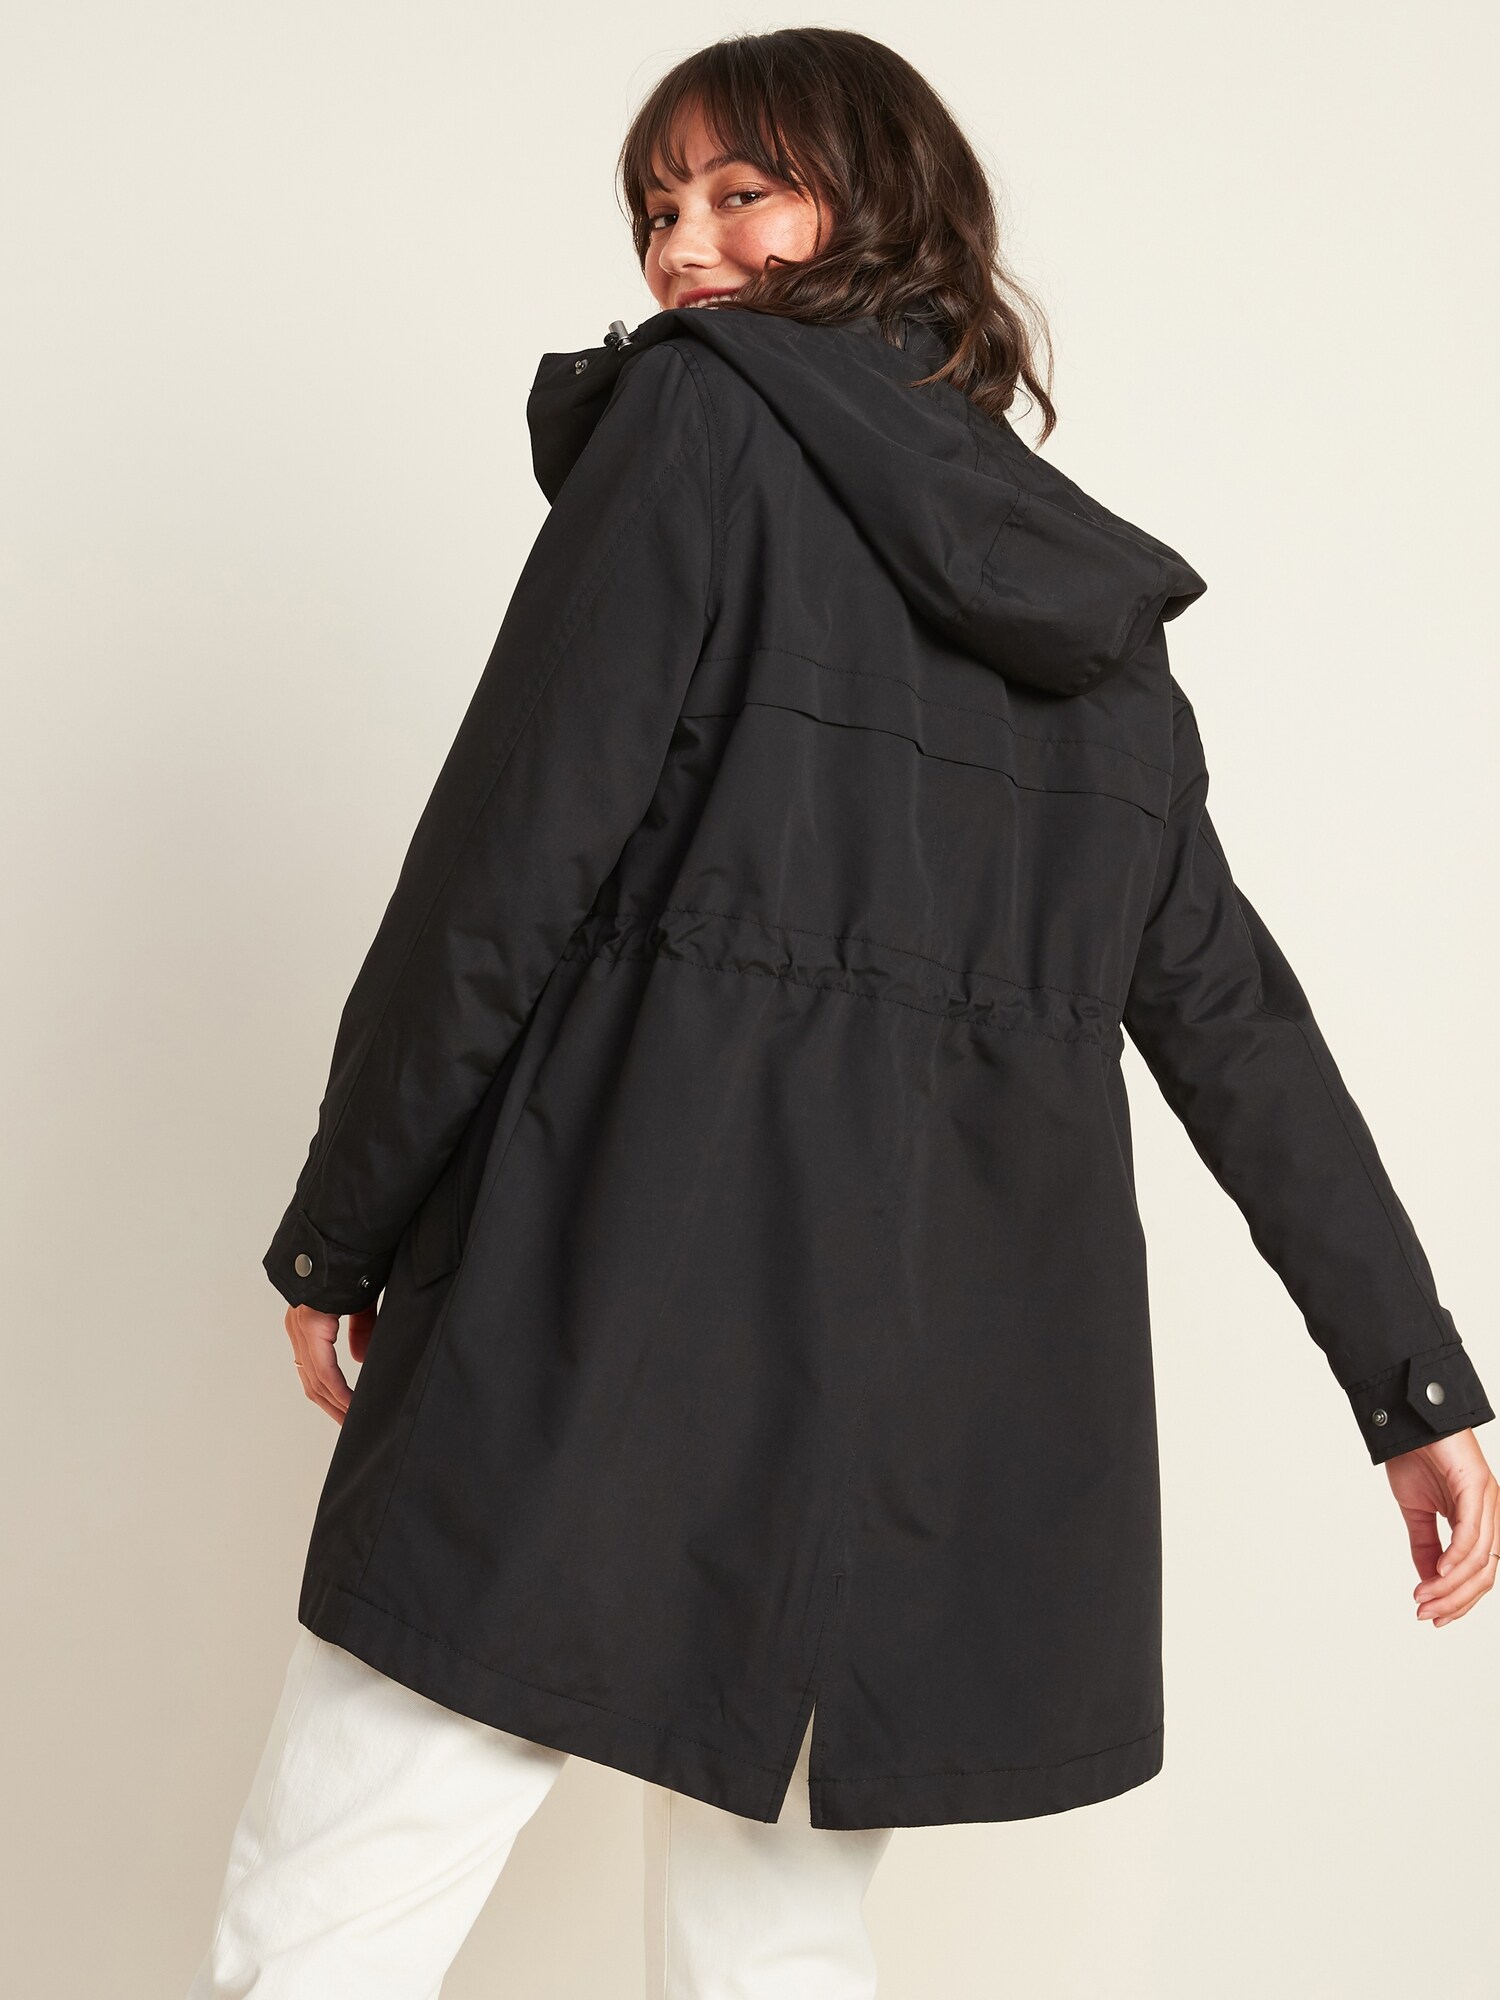 Oversized Hooded Utility Rain Jacket for Women | Old Navy